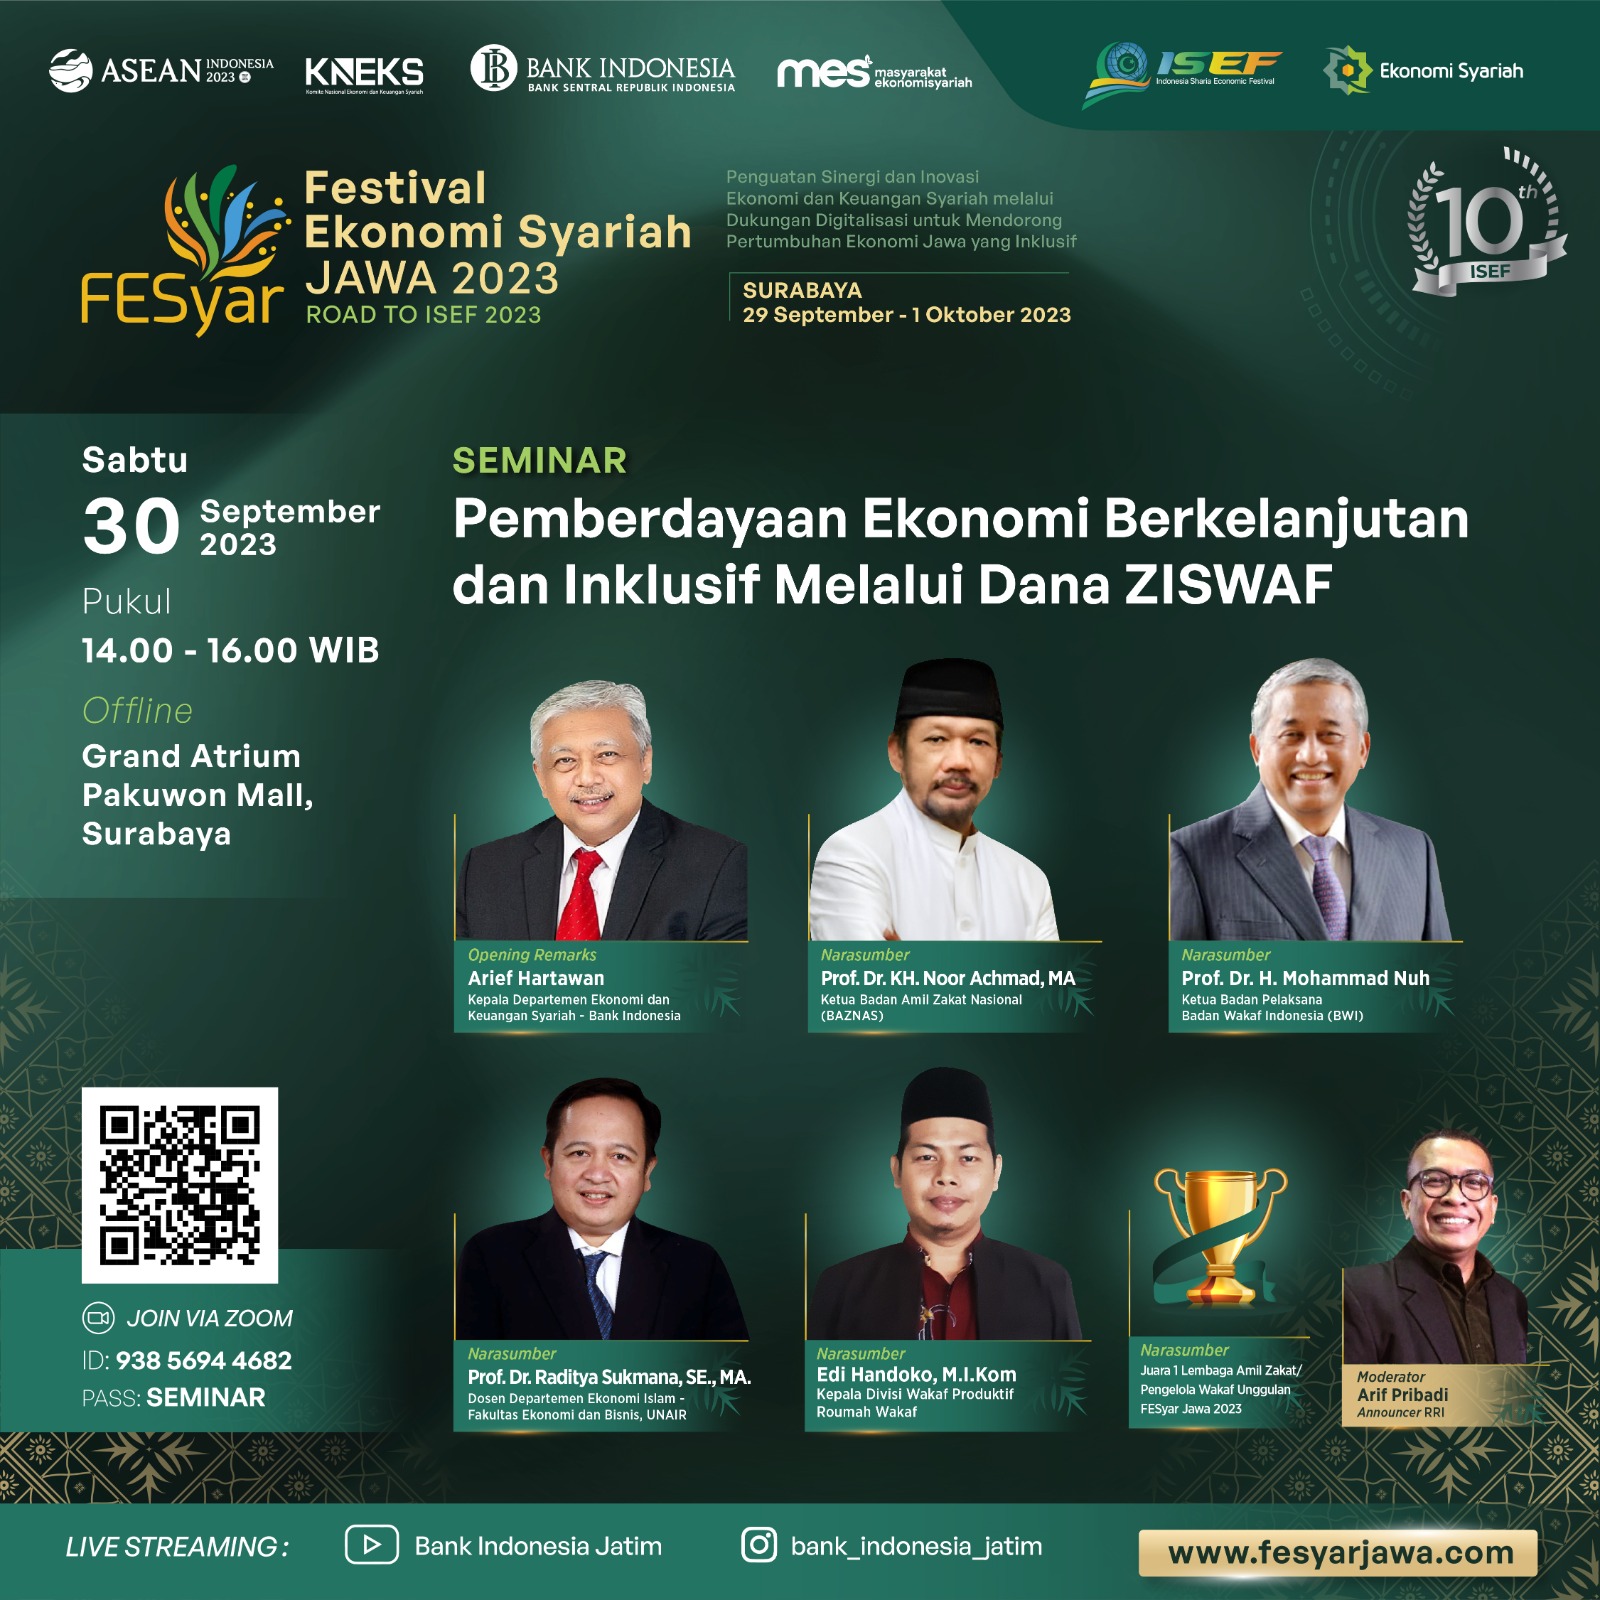 Kepala Devisi wakaf Produktif Roumah wakaf  Jadi Pembicara di Seminar Festival Ekonomi Syariah Jawa 2023